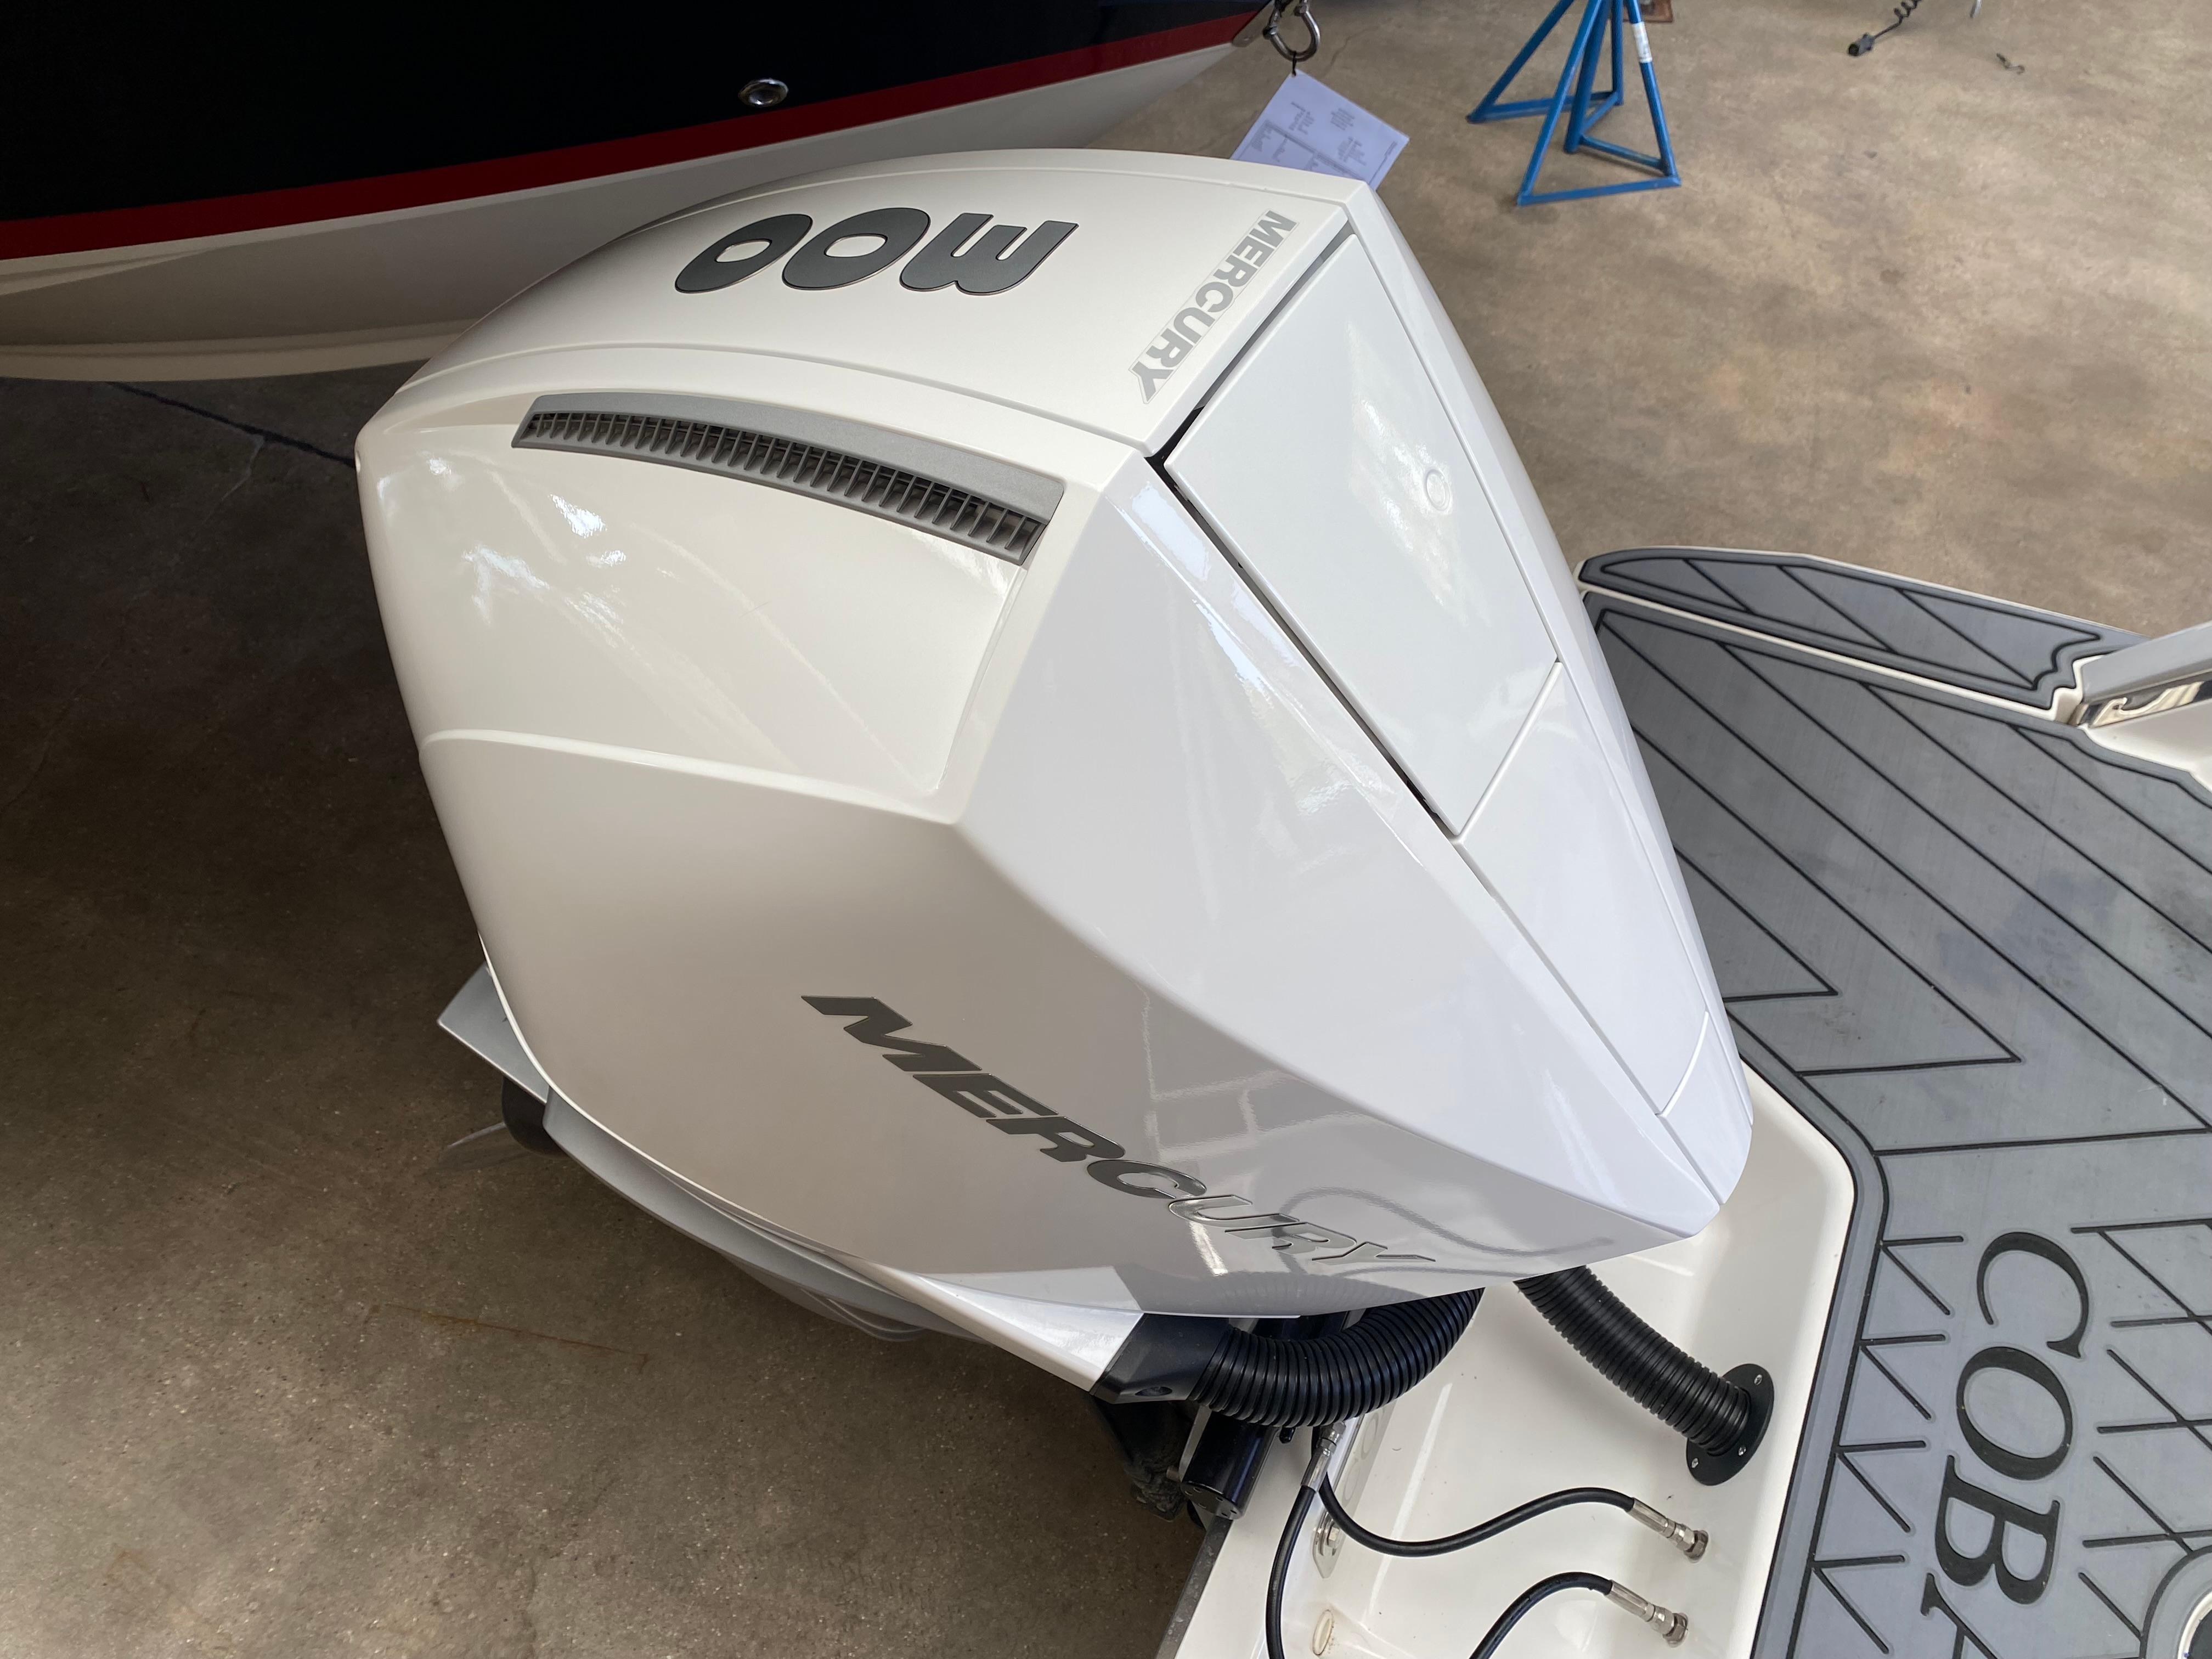 2022 Cobalt R6 Outboard